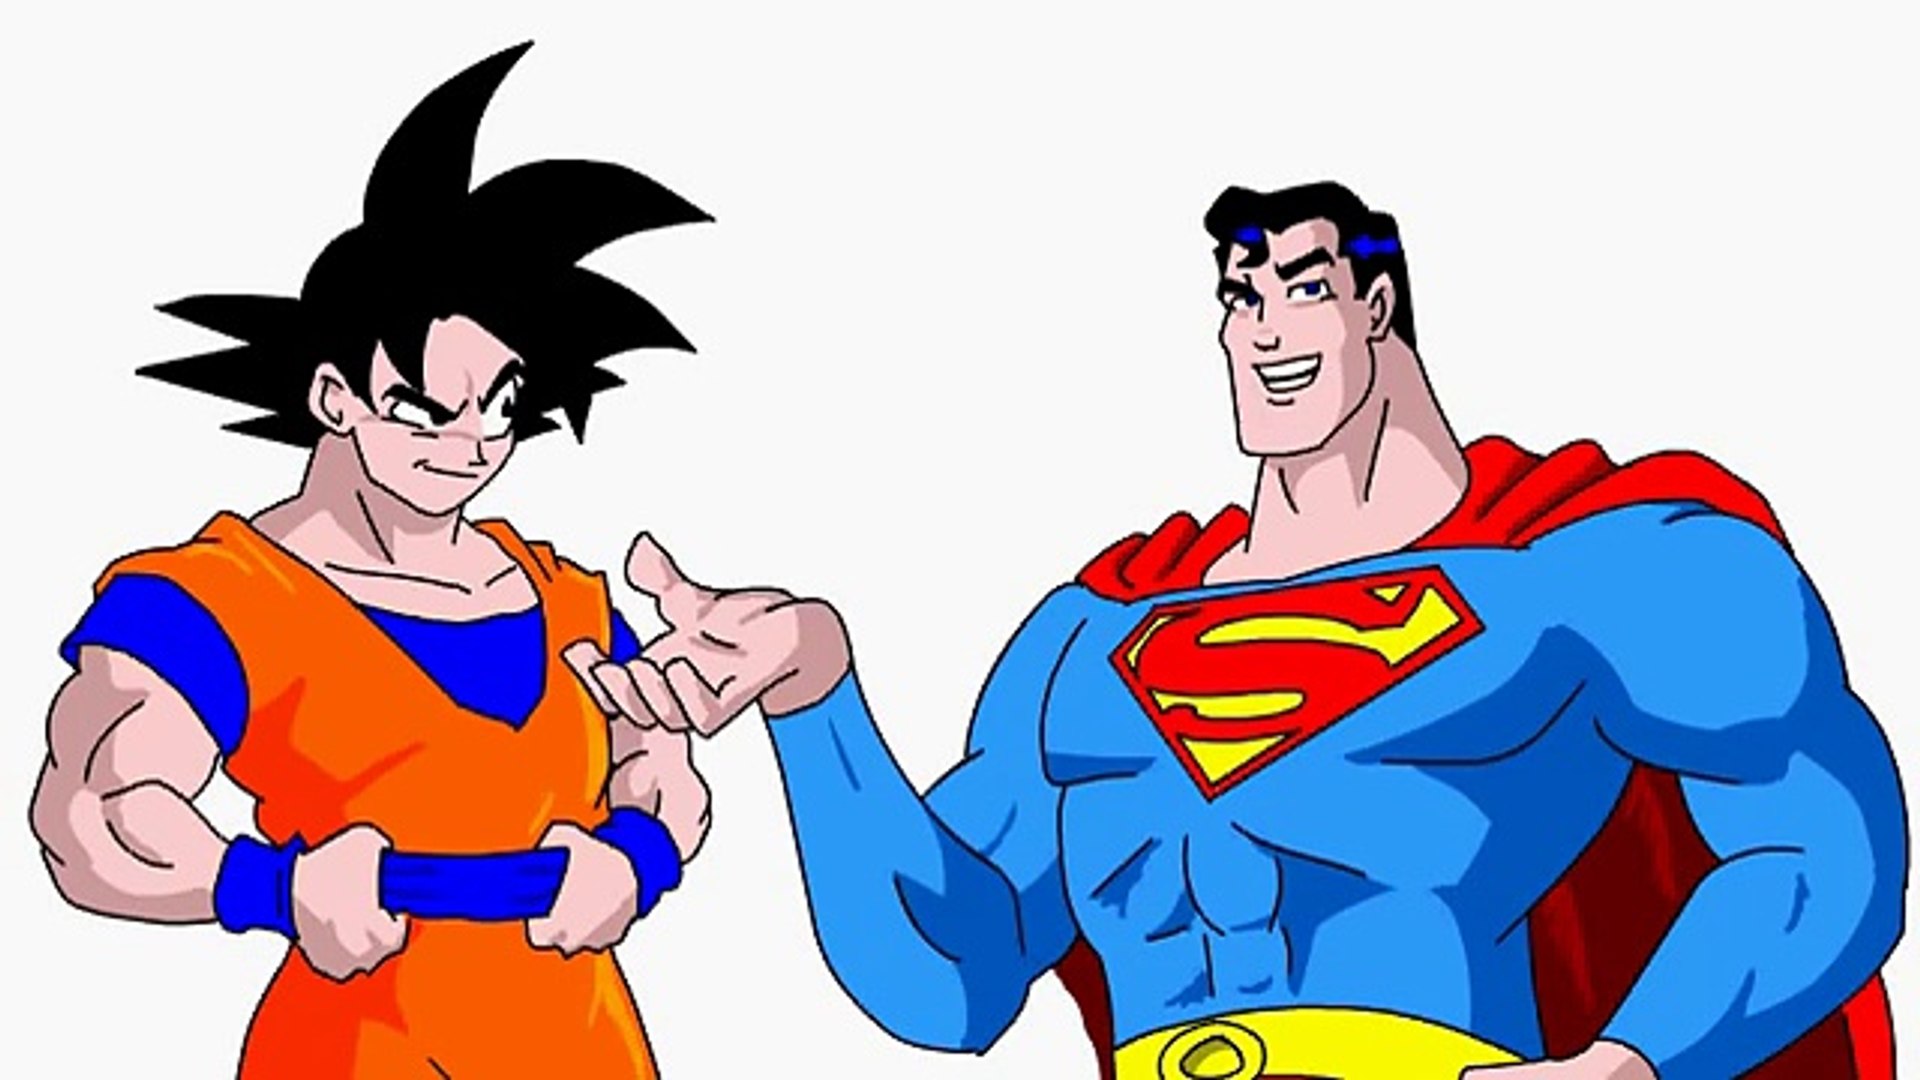 GOKU vs SUPERMAN psa - Dailymotion Video